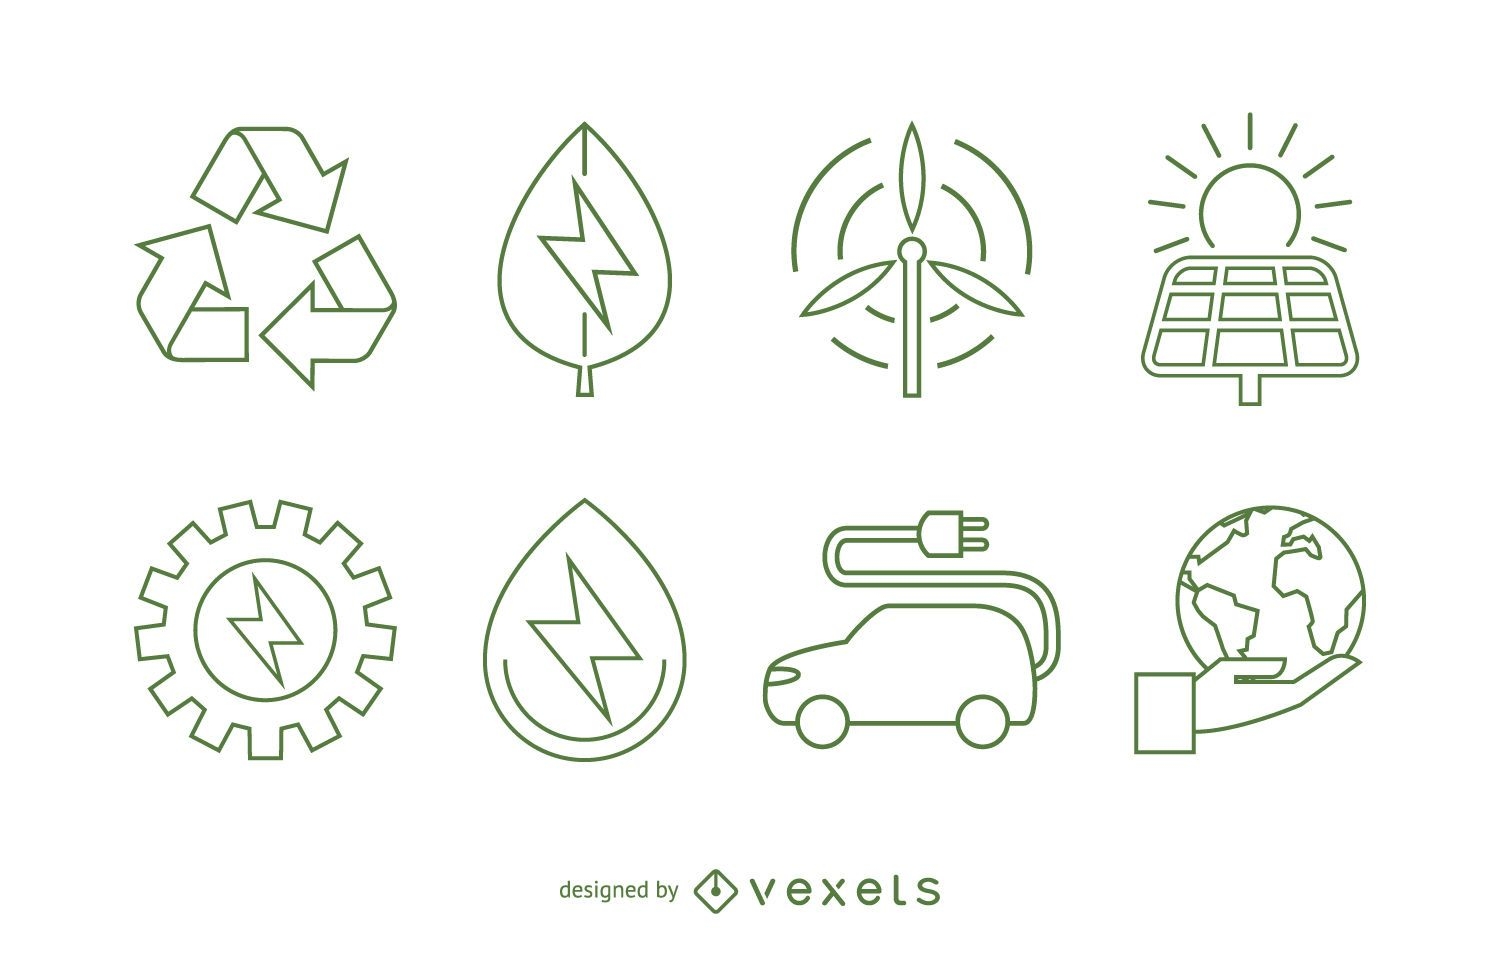 green energy symbol